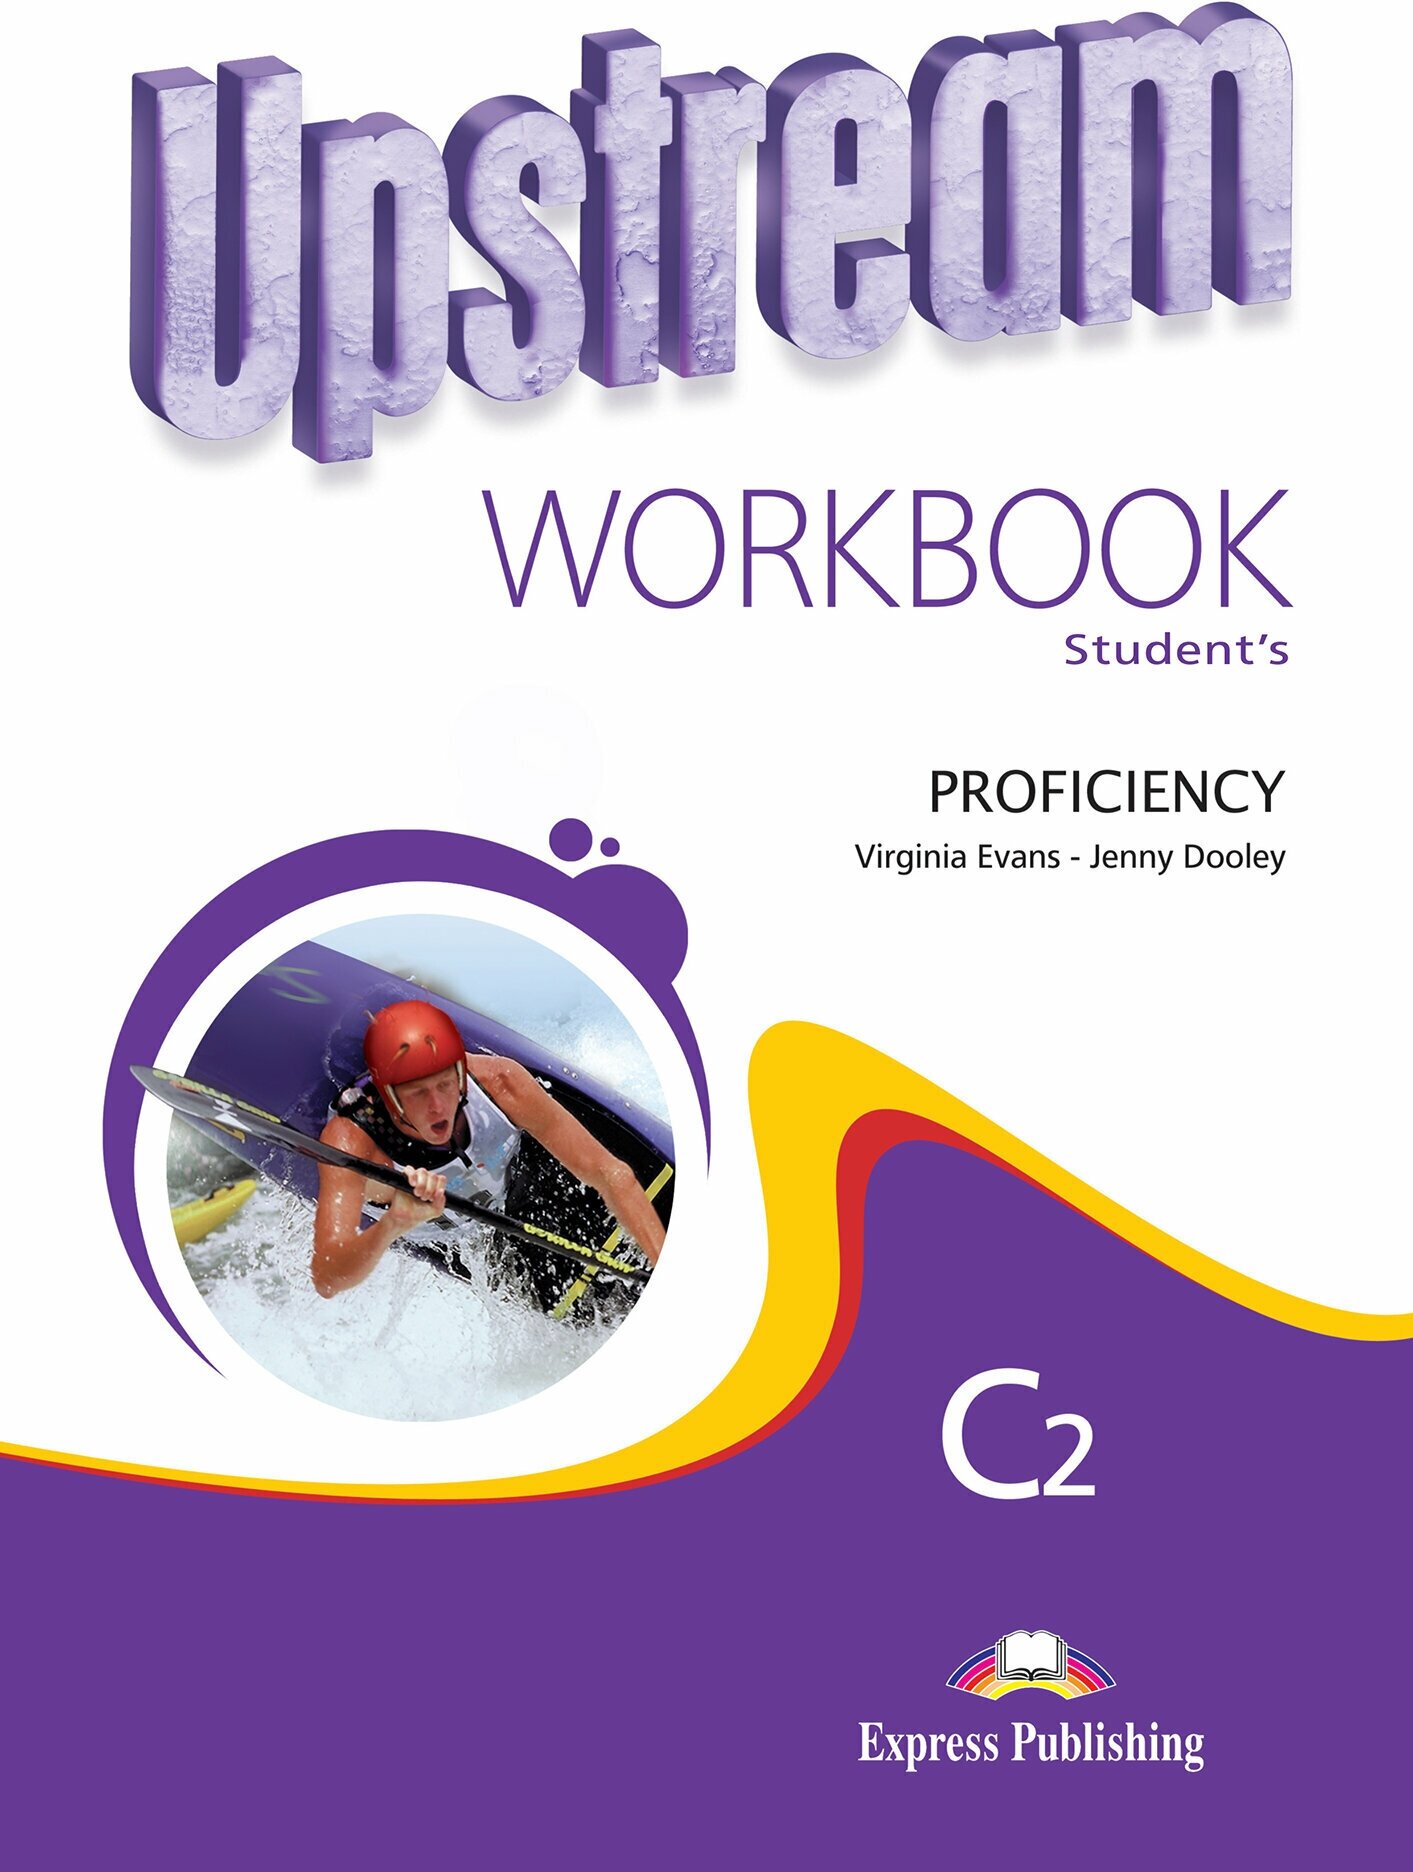 Upstream Proficiency C2. Workbook Students (2nd Edition). Рабочая тетрадь